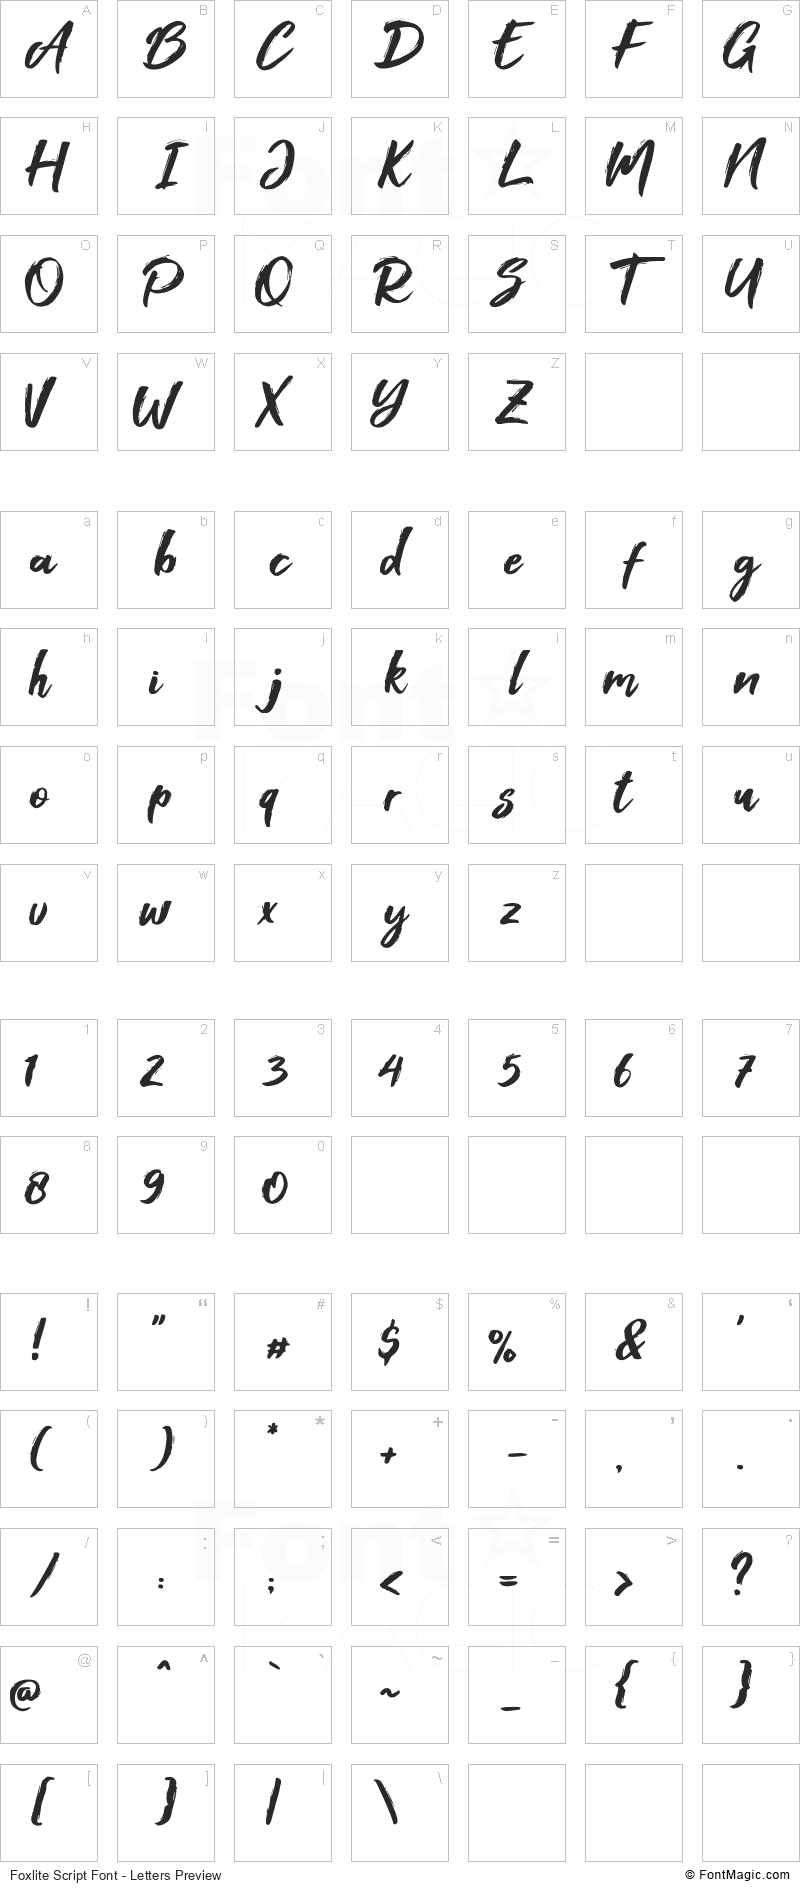 Foxlite Script Font - All Latters Preview Chart